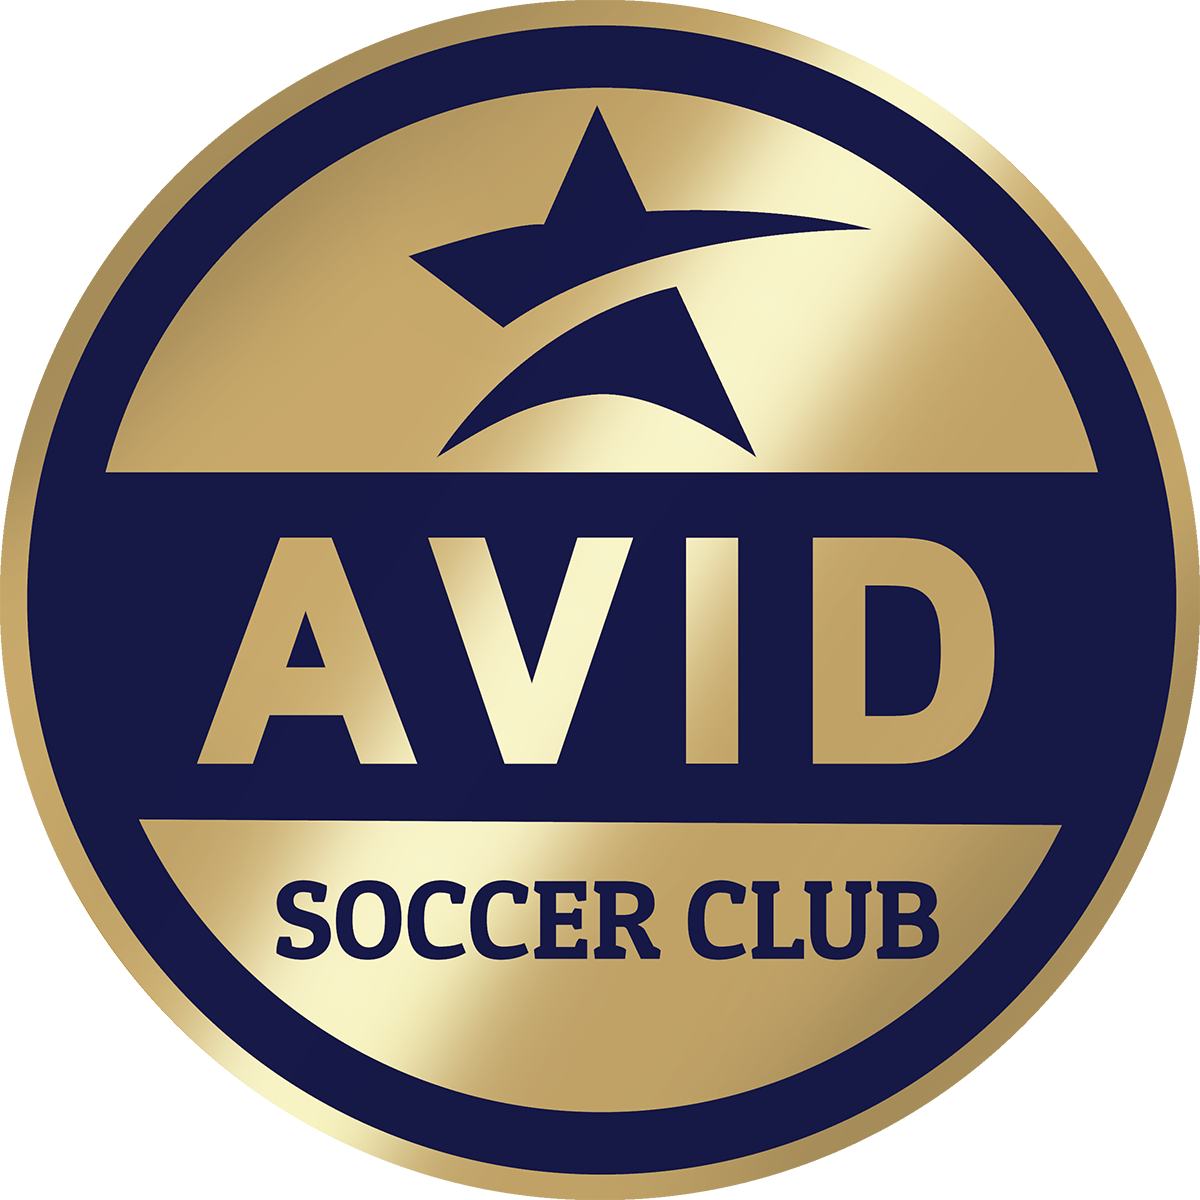 AVID Soccer Club team badge